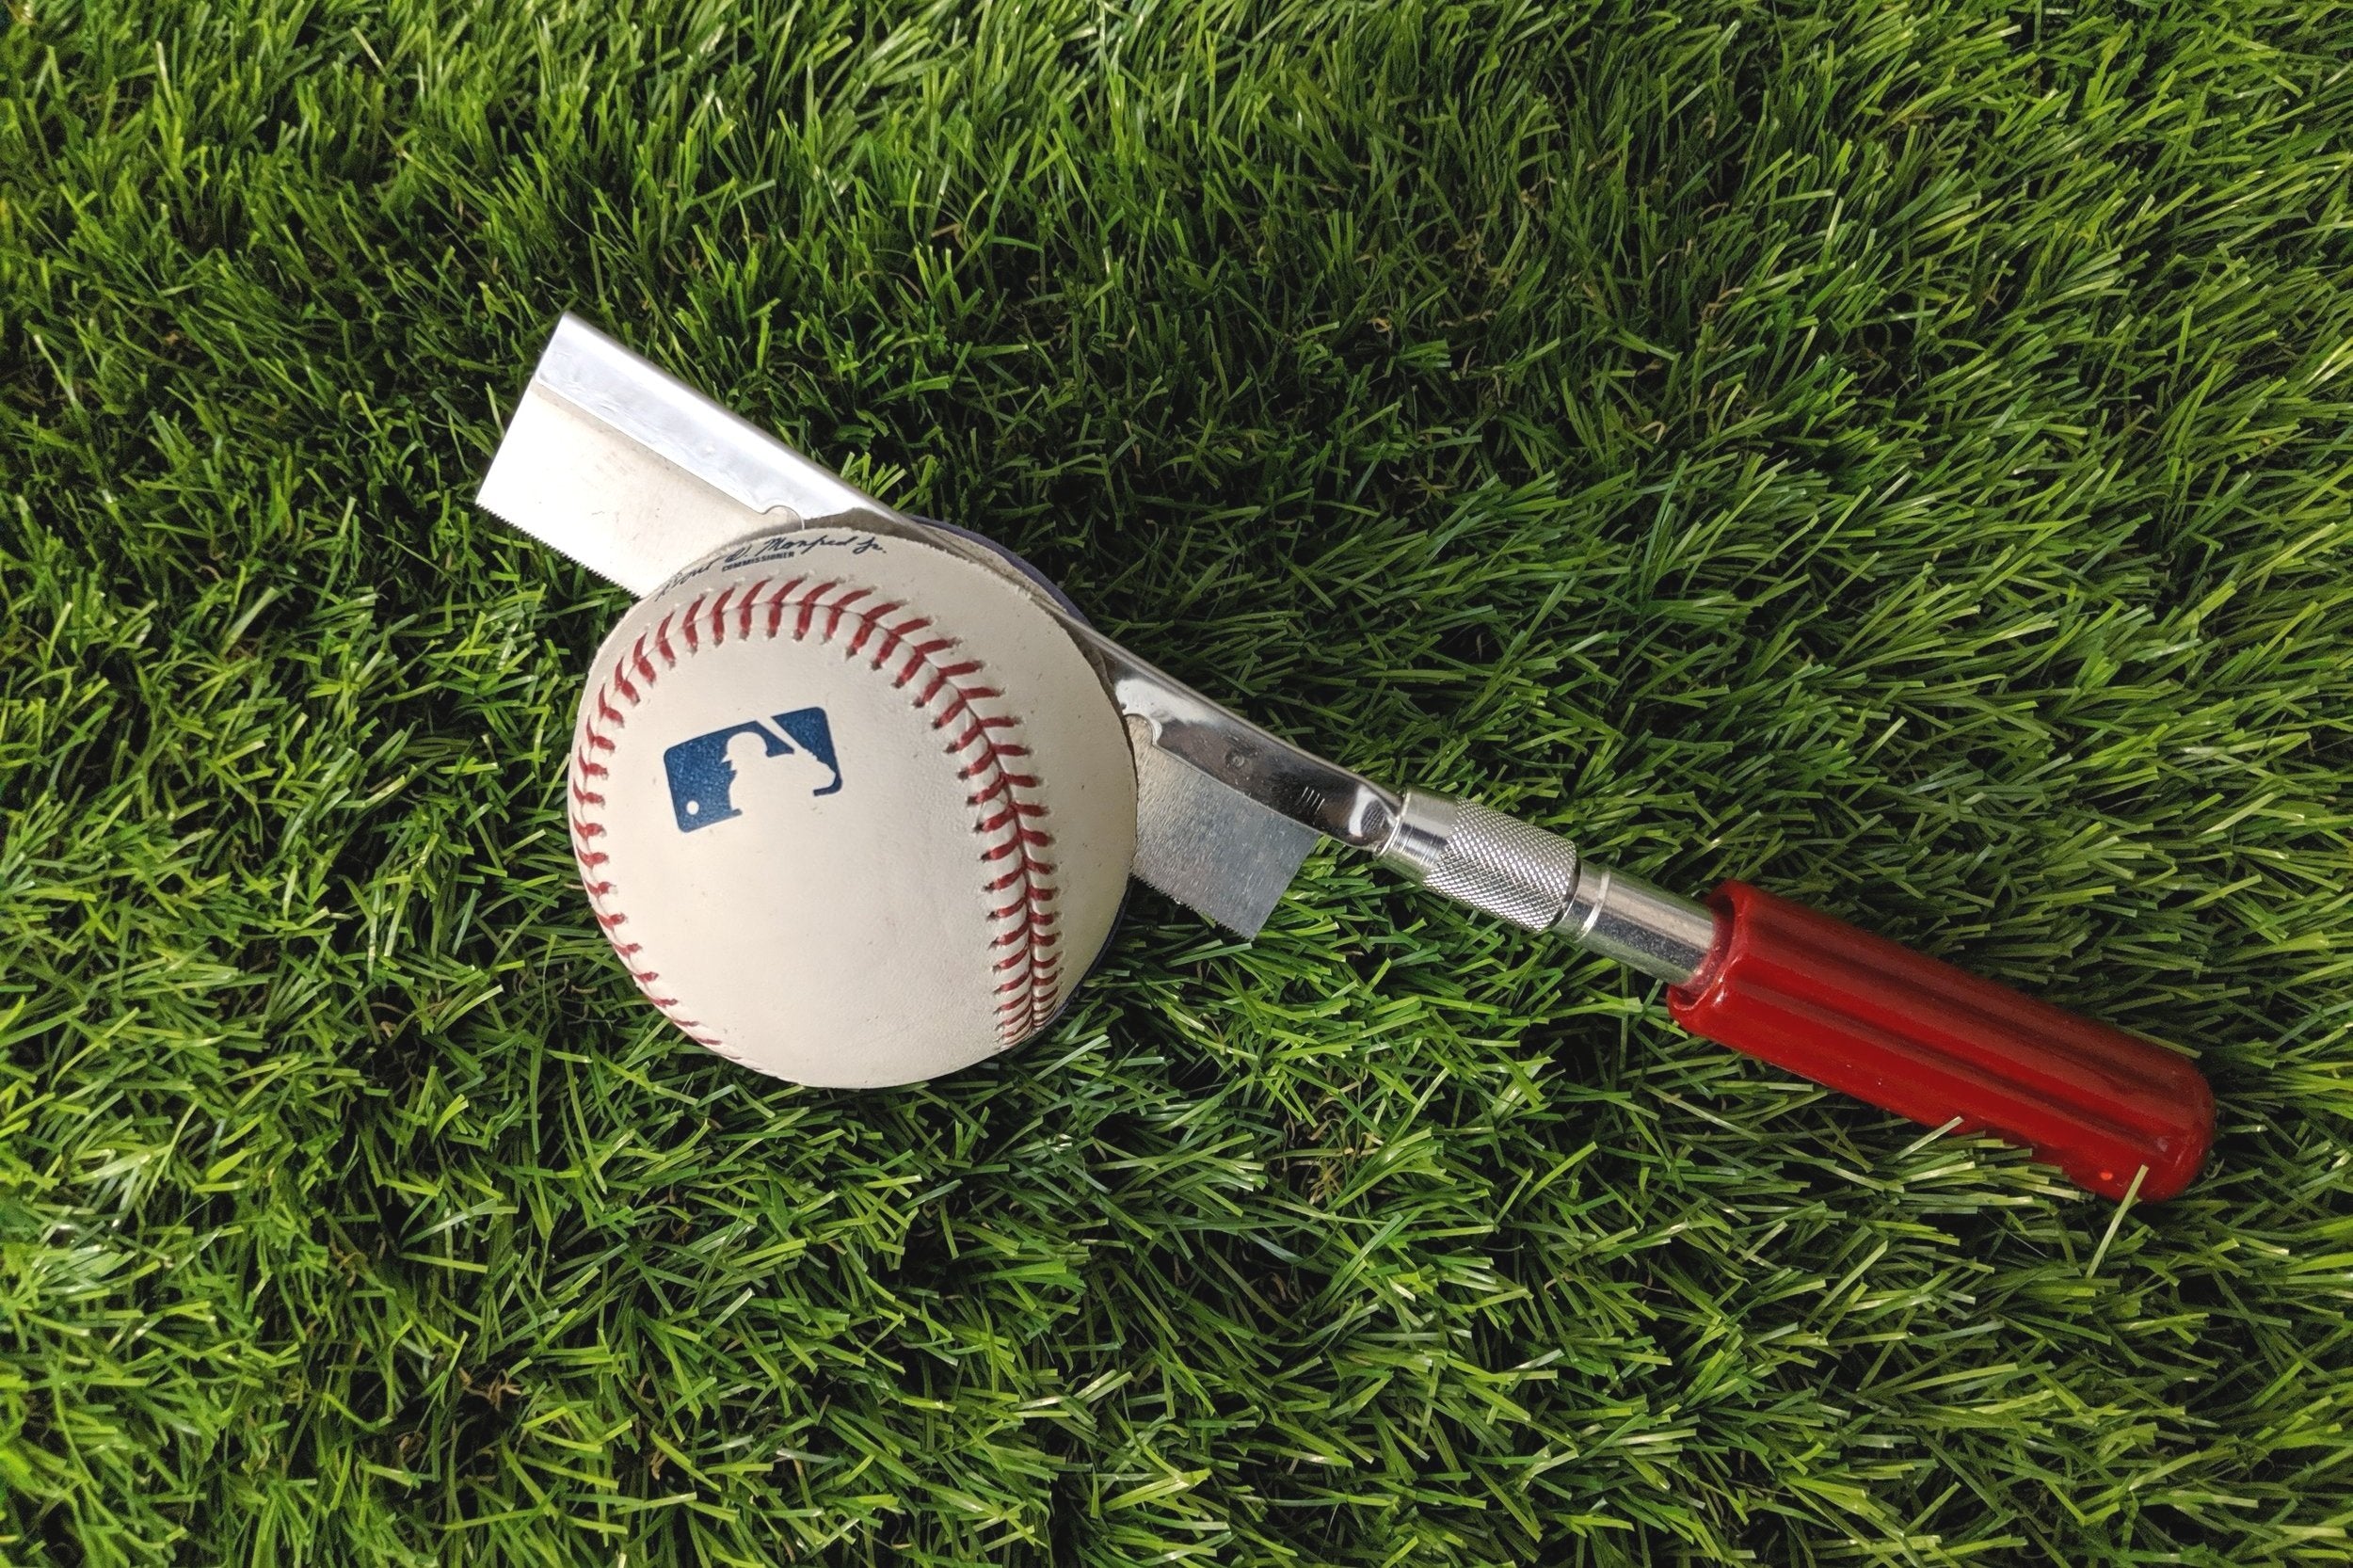 Baseball and cutting tool used for making baseball jewelry